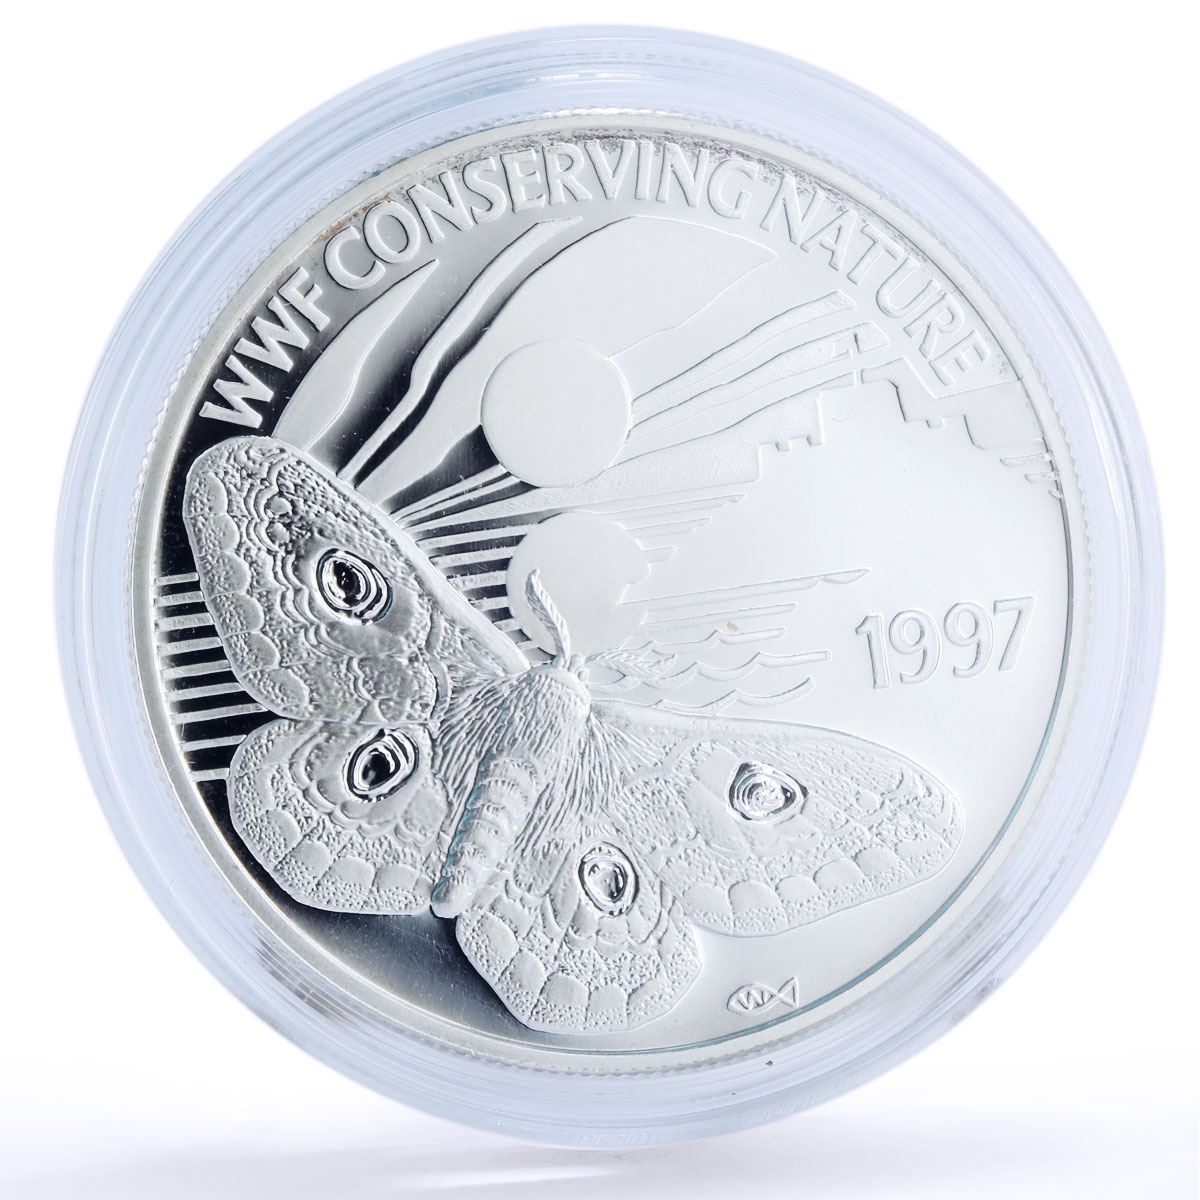 Bailiwick of Guernsey 2 pounds WWF Emperor Moth Butterfly Fauna silver coin 1997